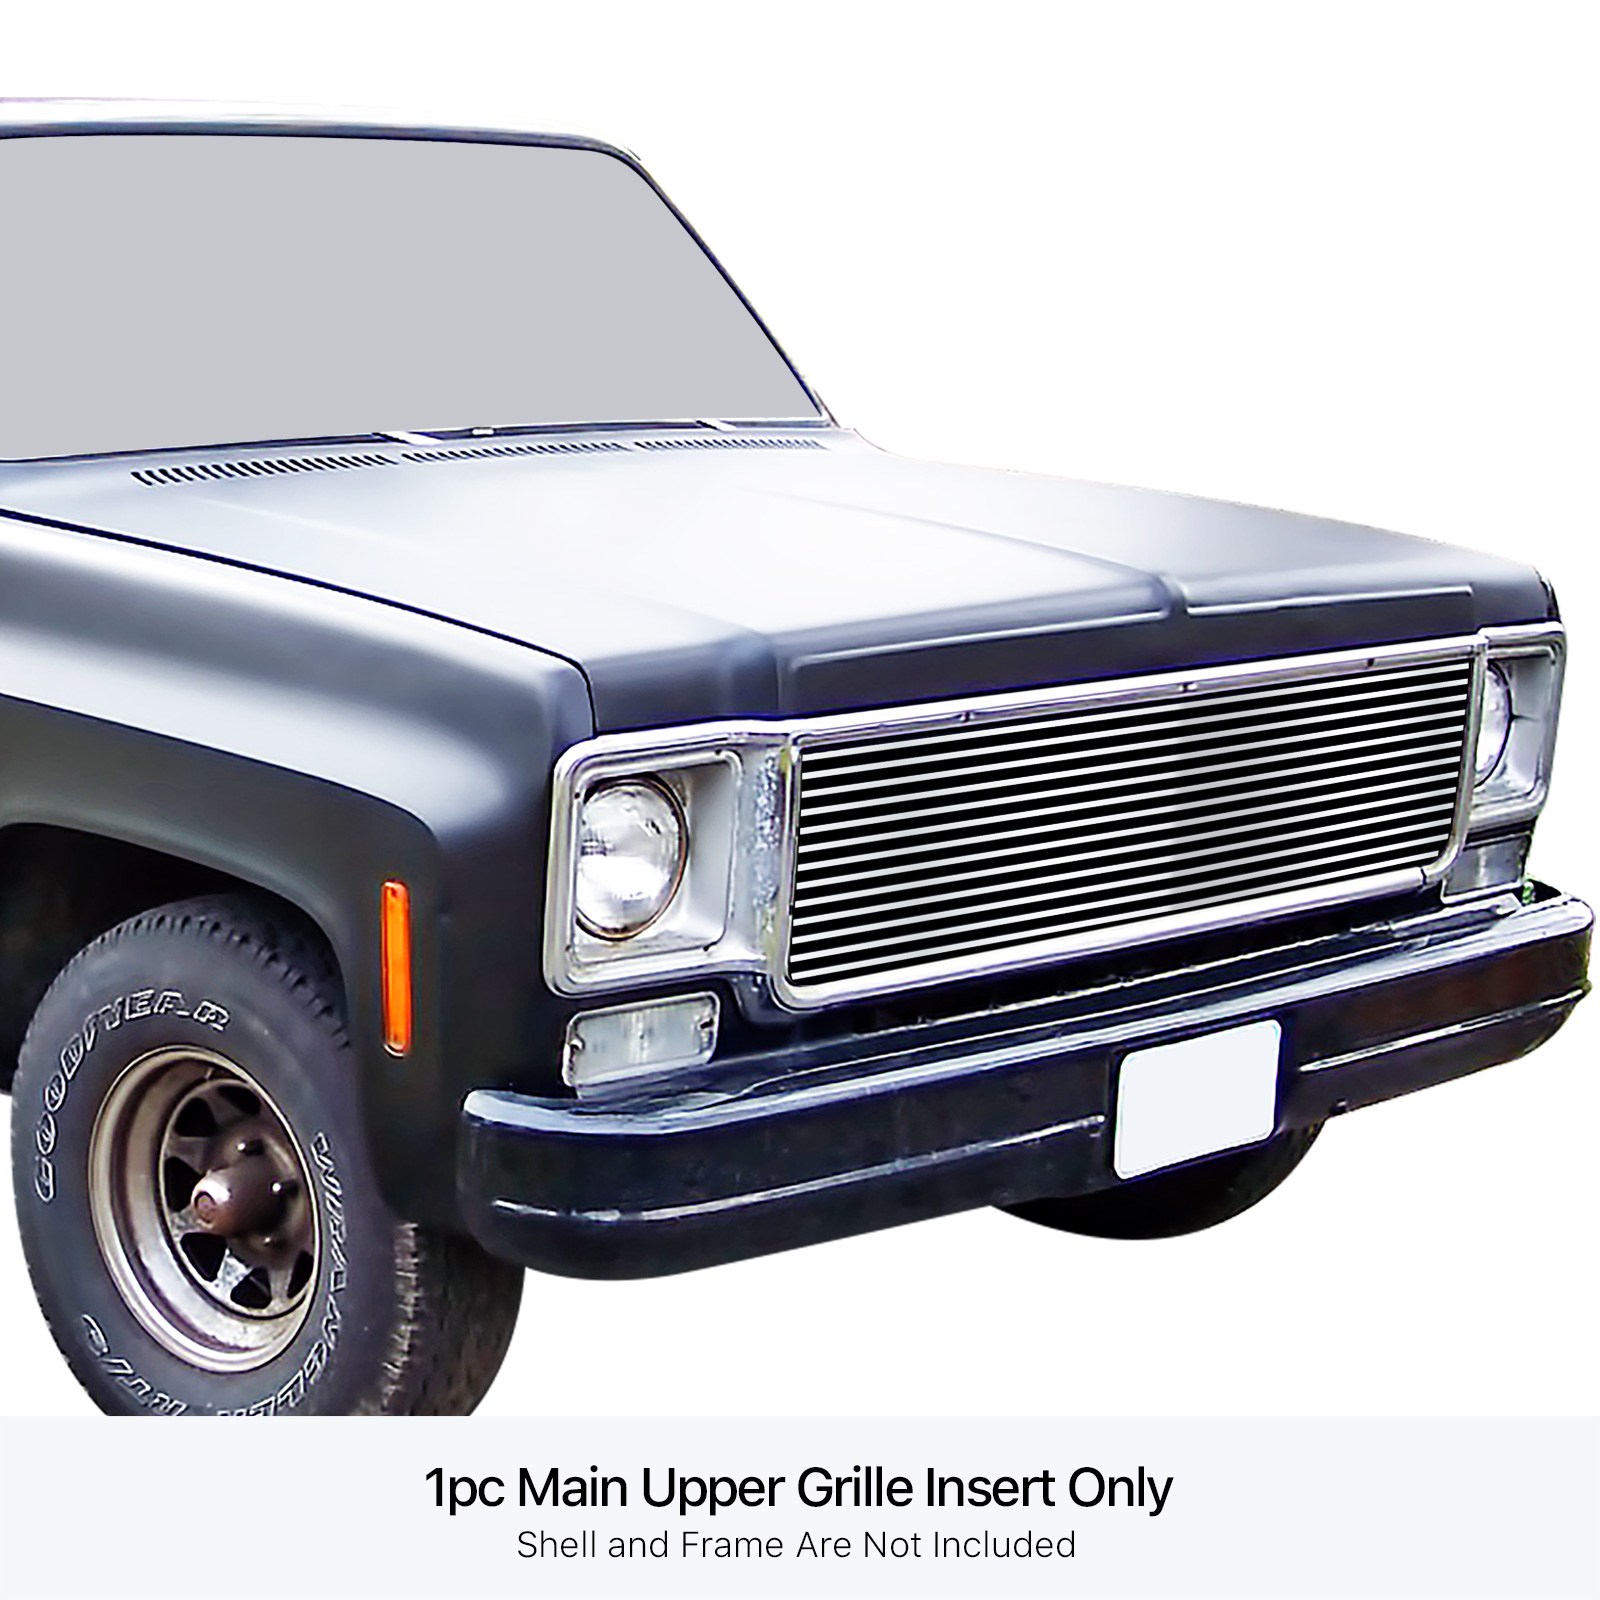 1973-1980 Chevy Blazer /1973-1980 Chevy C/K Pickup /1973-1980 Chevy Suburban /1973-1980 GMC C/K Pickup /1973-1980 GMC Suburban MAIN UPPER Stainless Steel Billet Grille